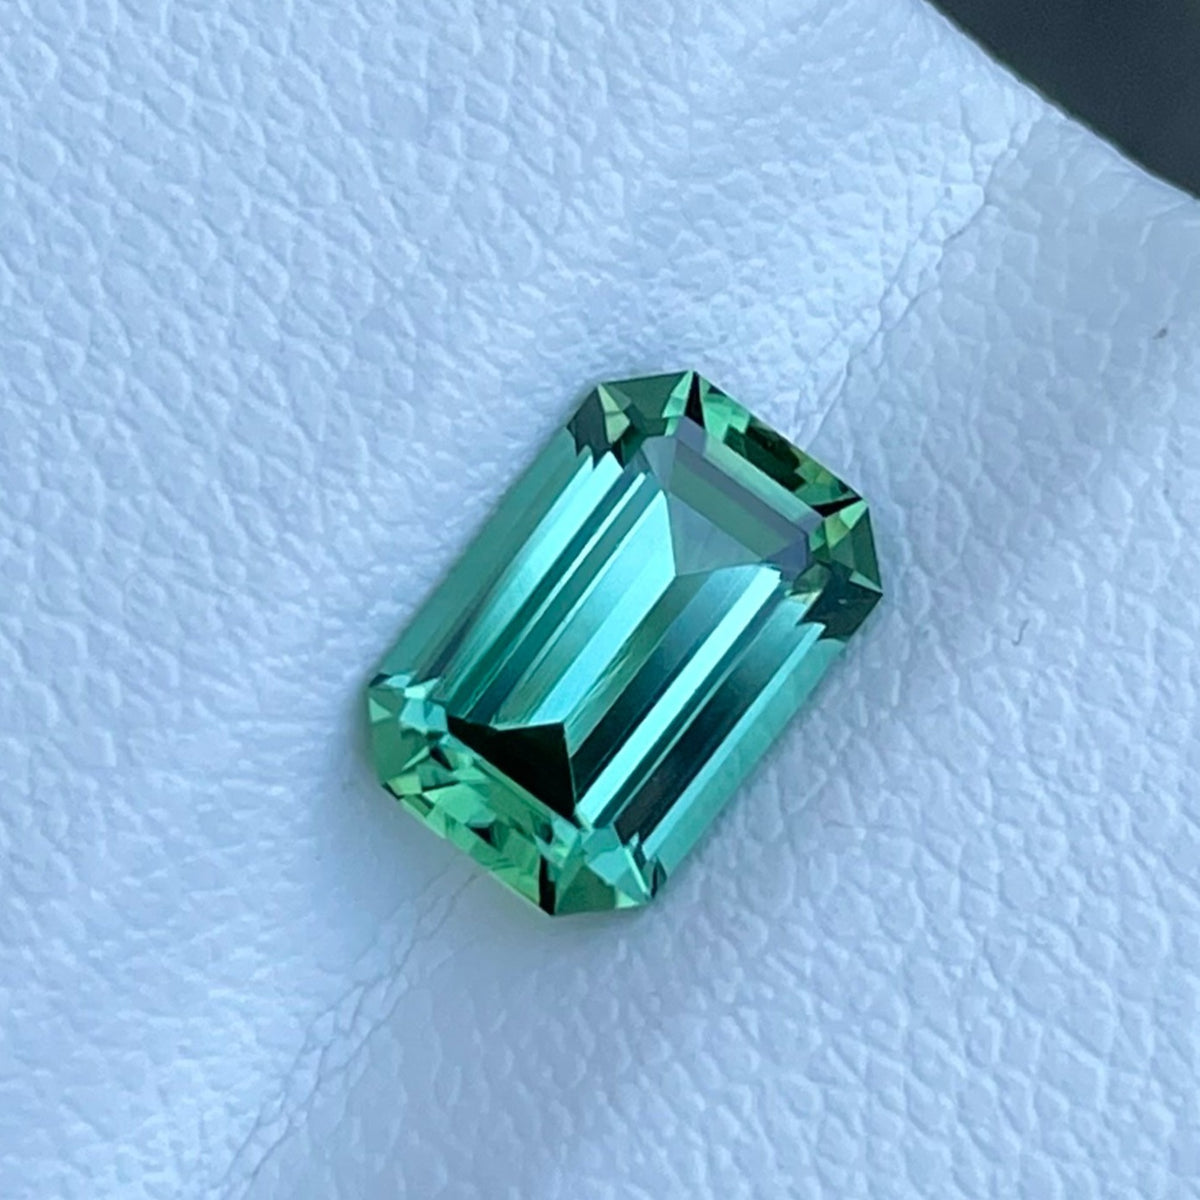 Mint Green Tourmaline 1.80 carats Emerald Cut Natural Afghan Gemstone